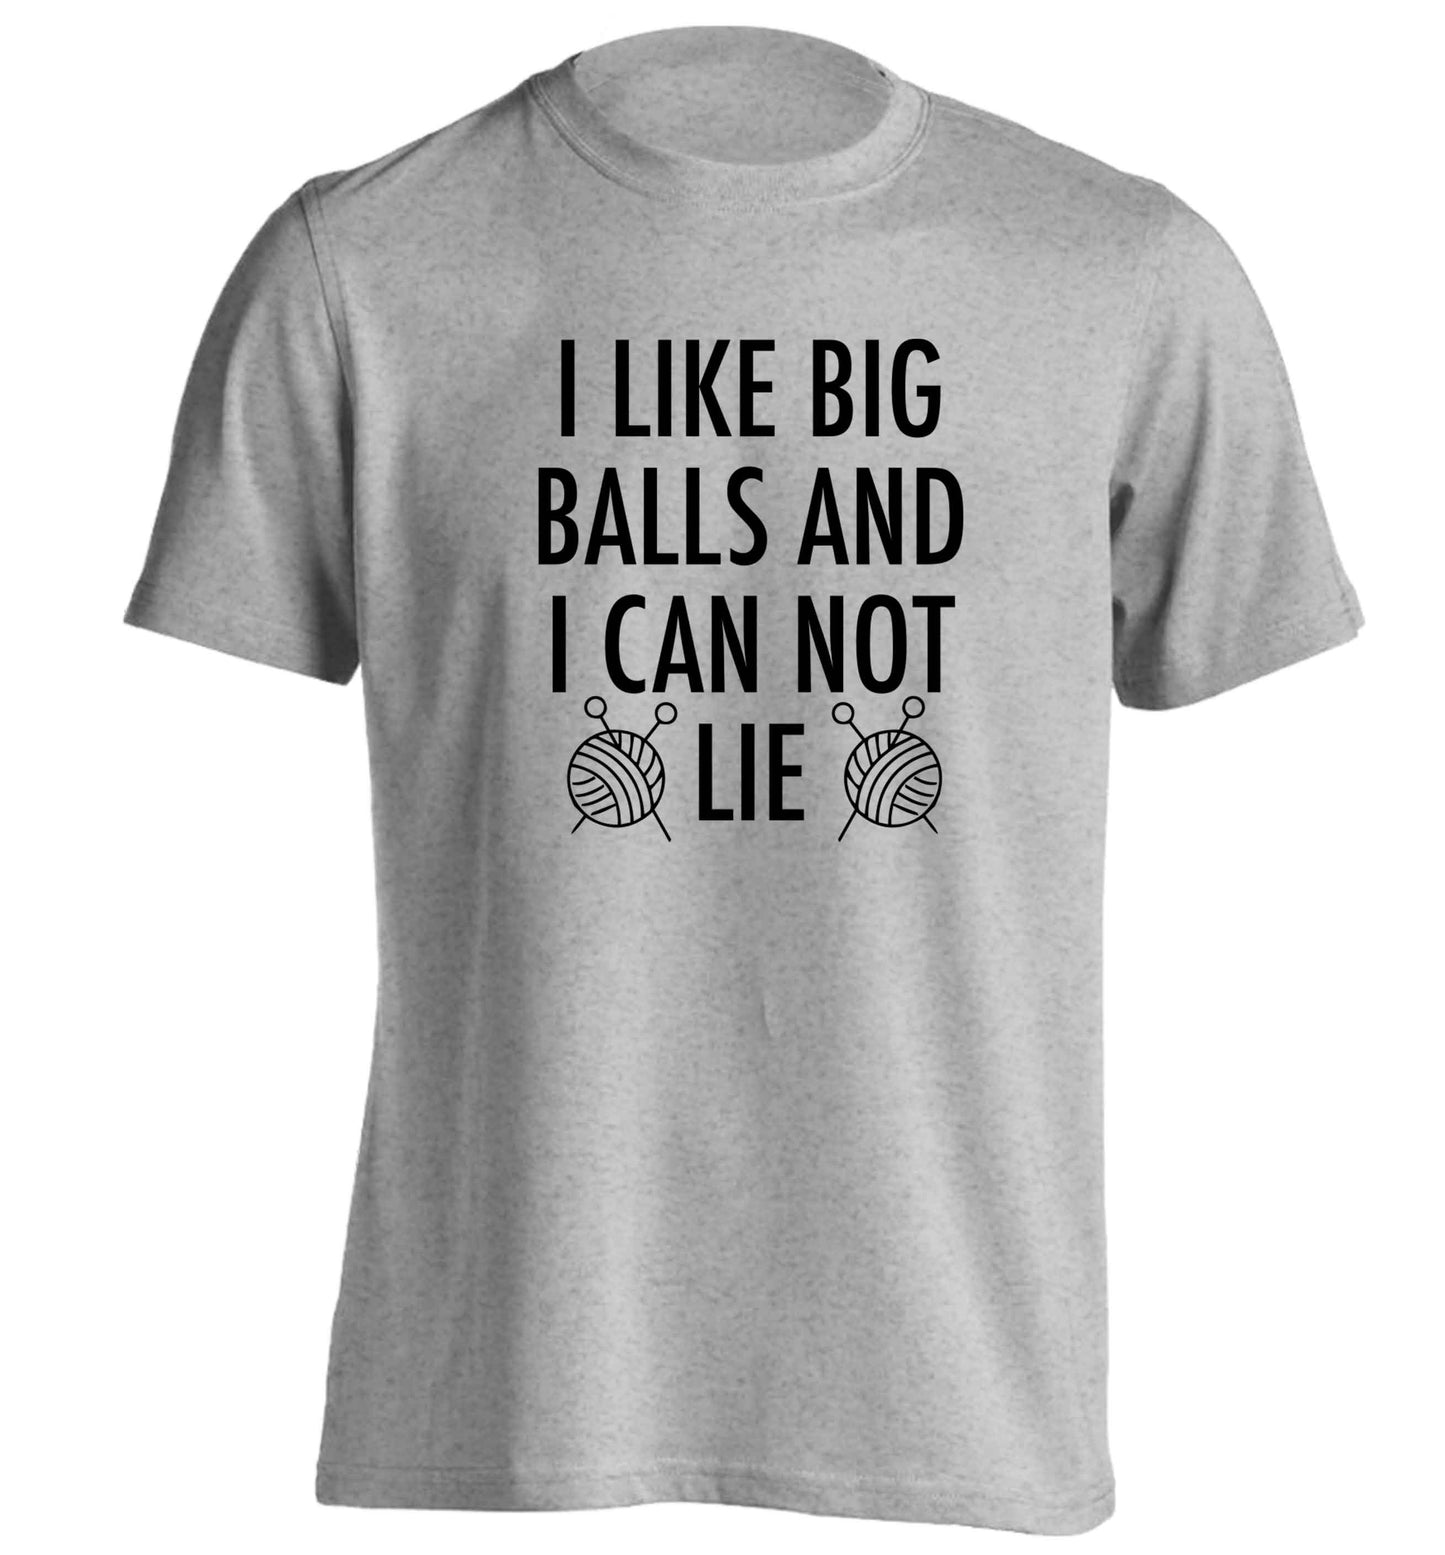 I like big balls and I can not lie adults unisex grey Tshirt 2XL